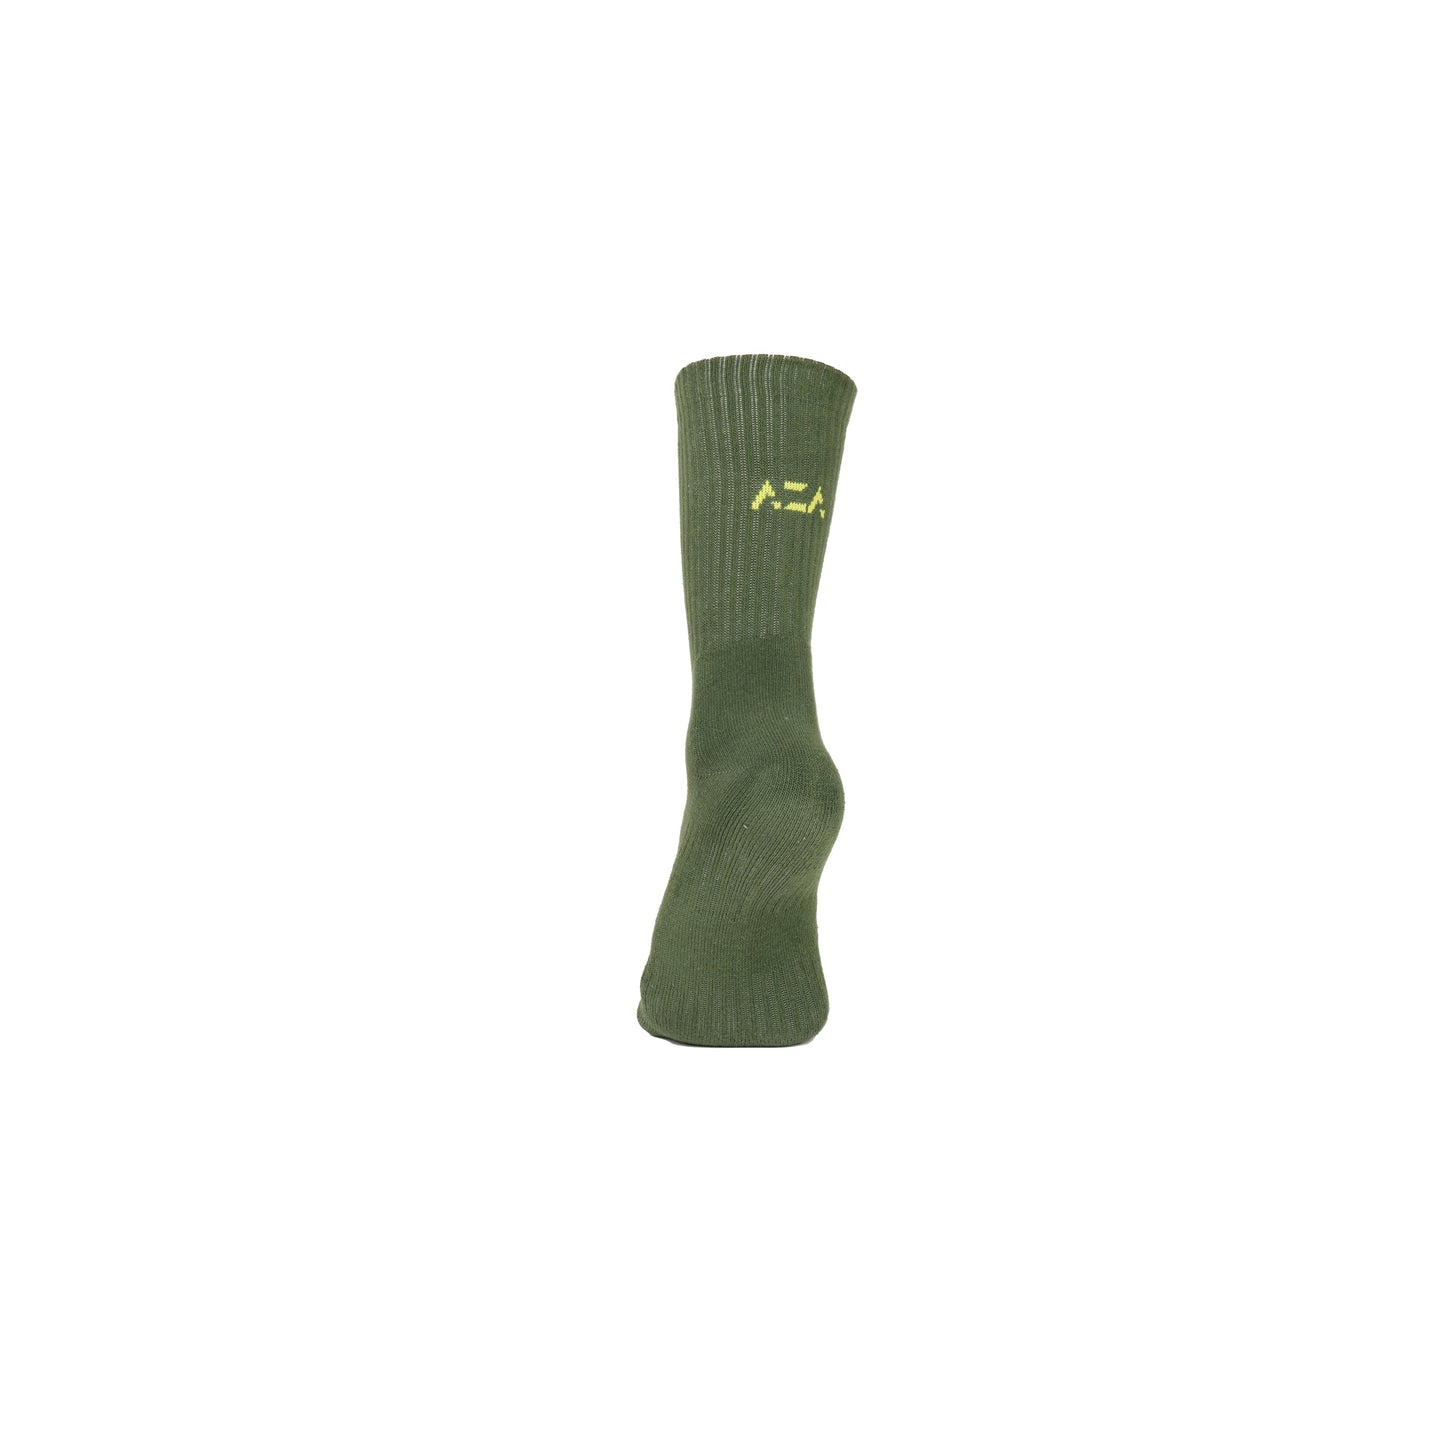 AZA Socks Colorful Edition - Army